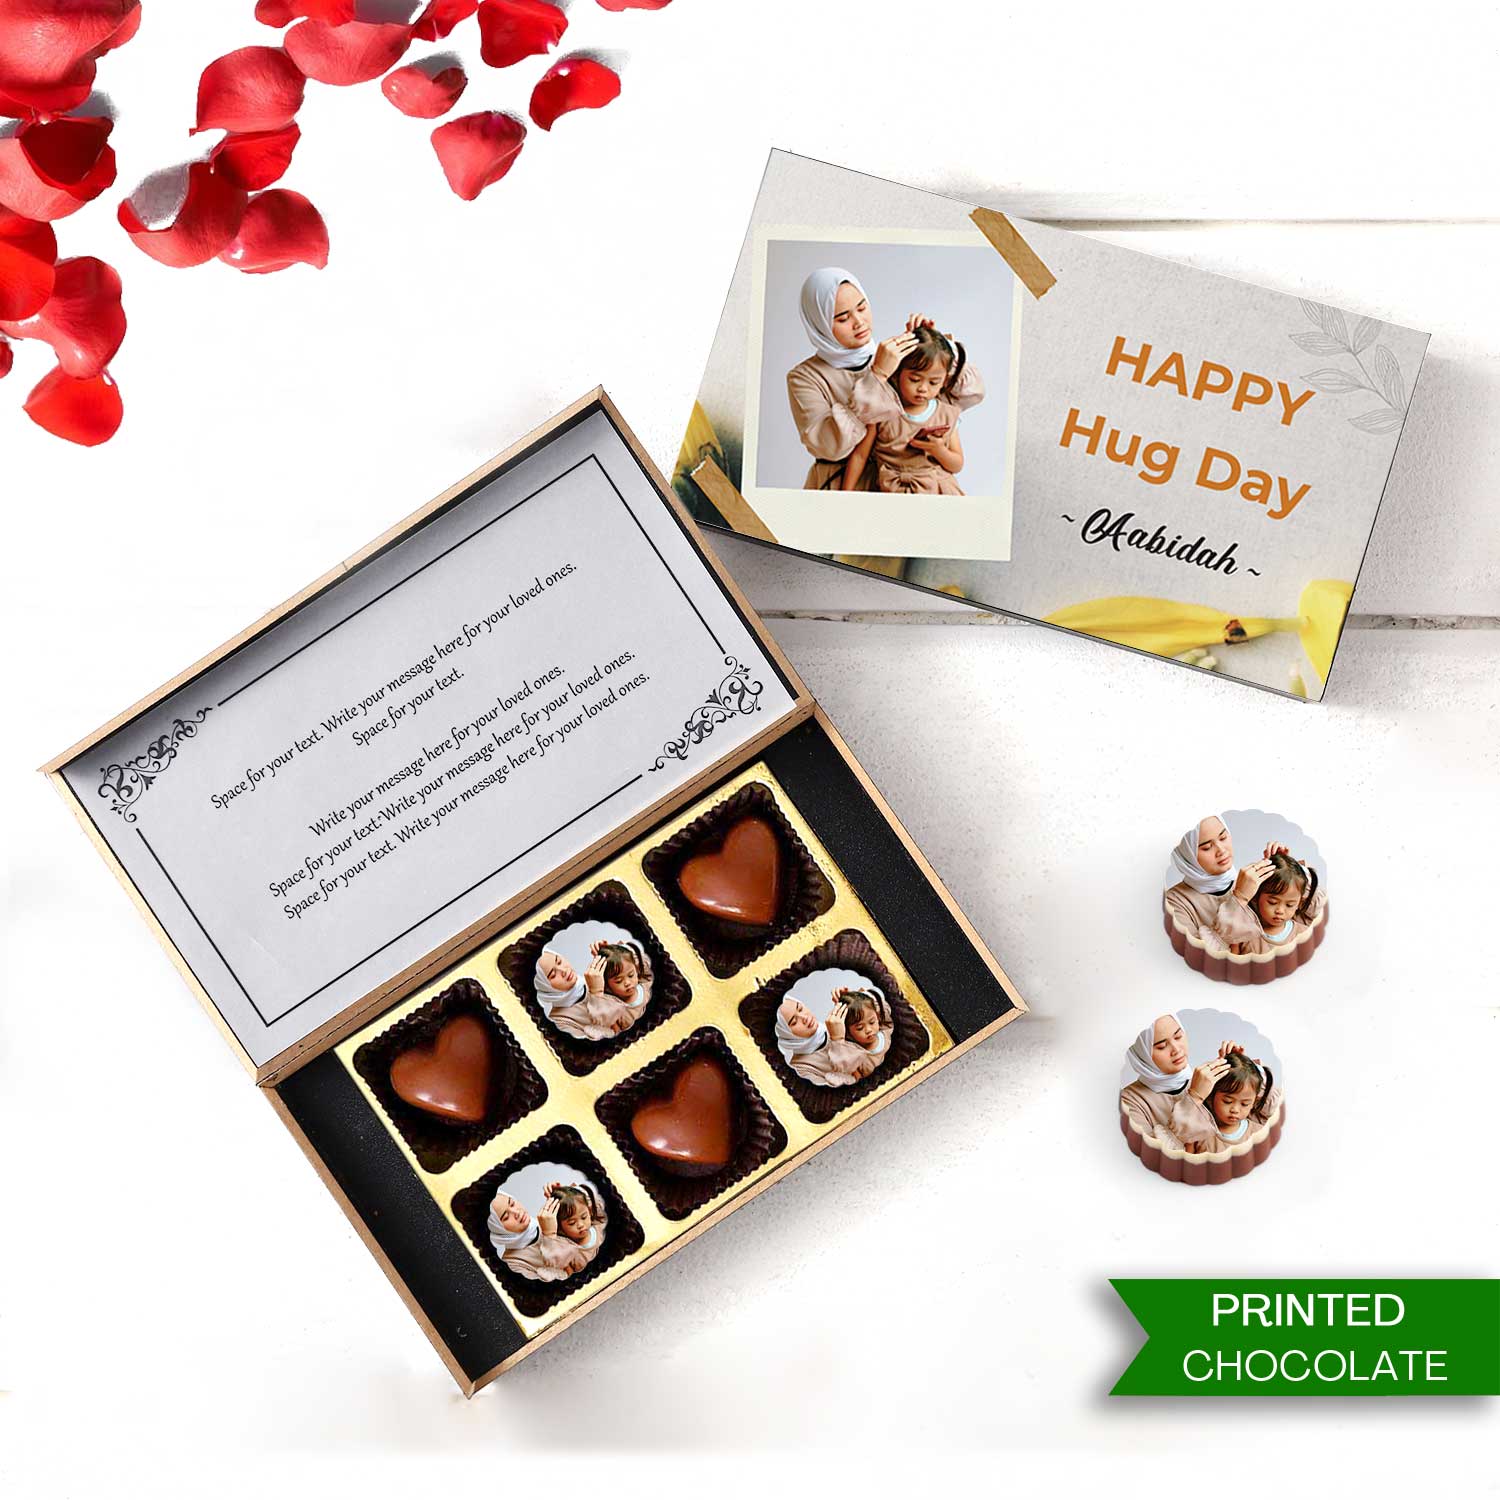 Customised Chocolate gift for Hug Day